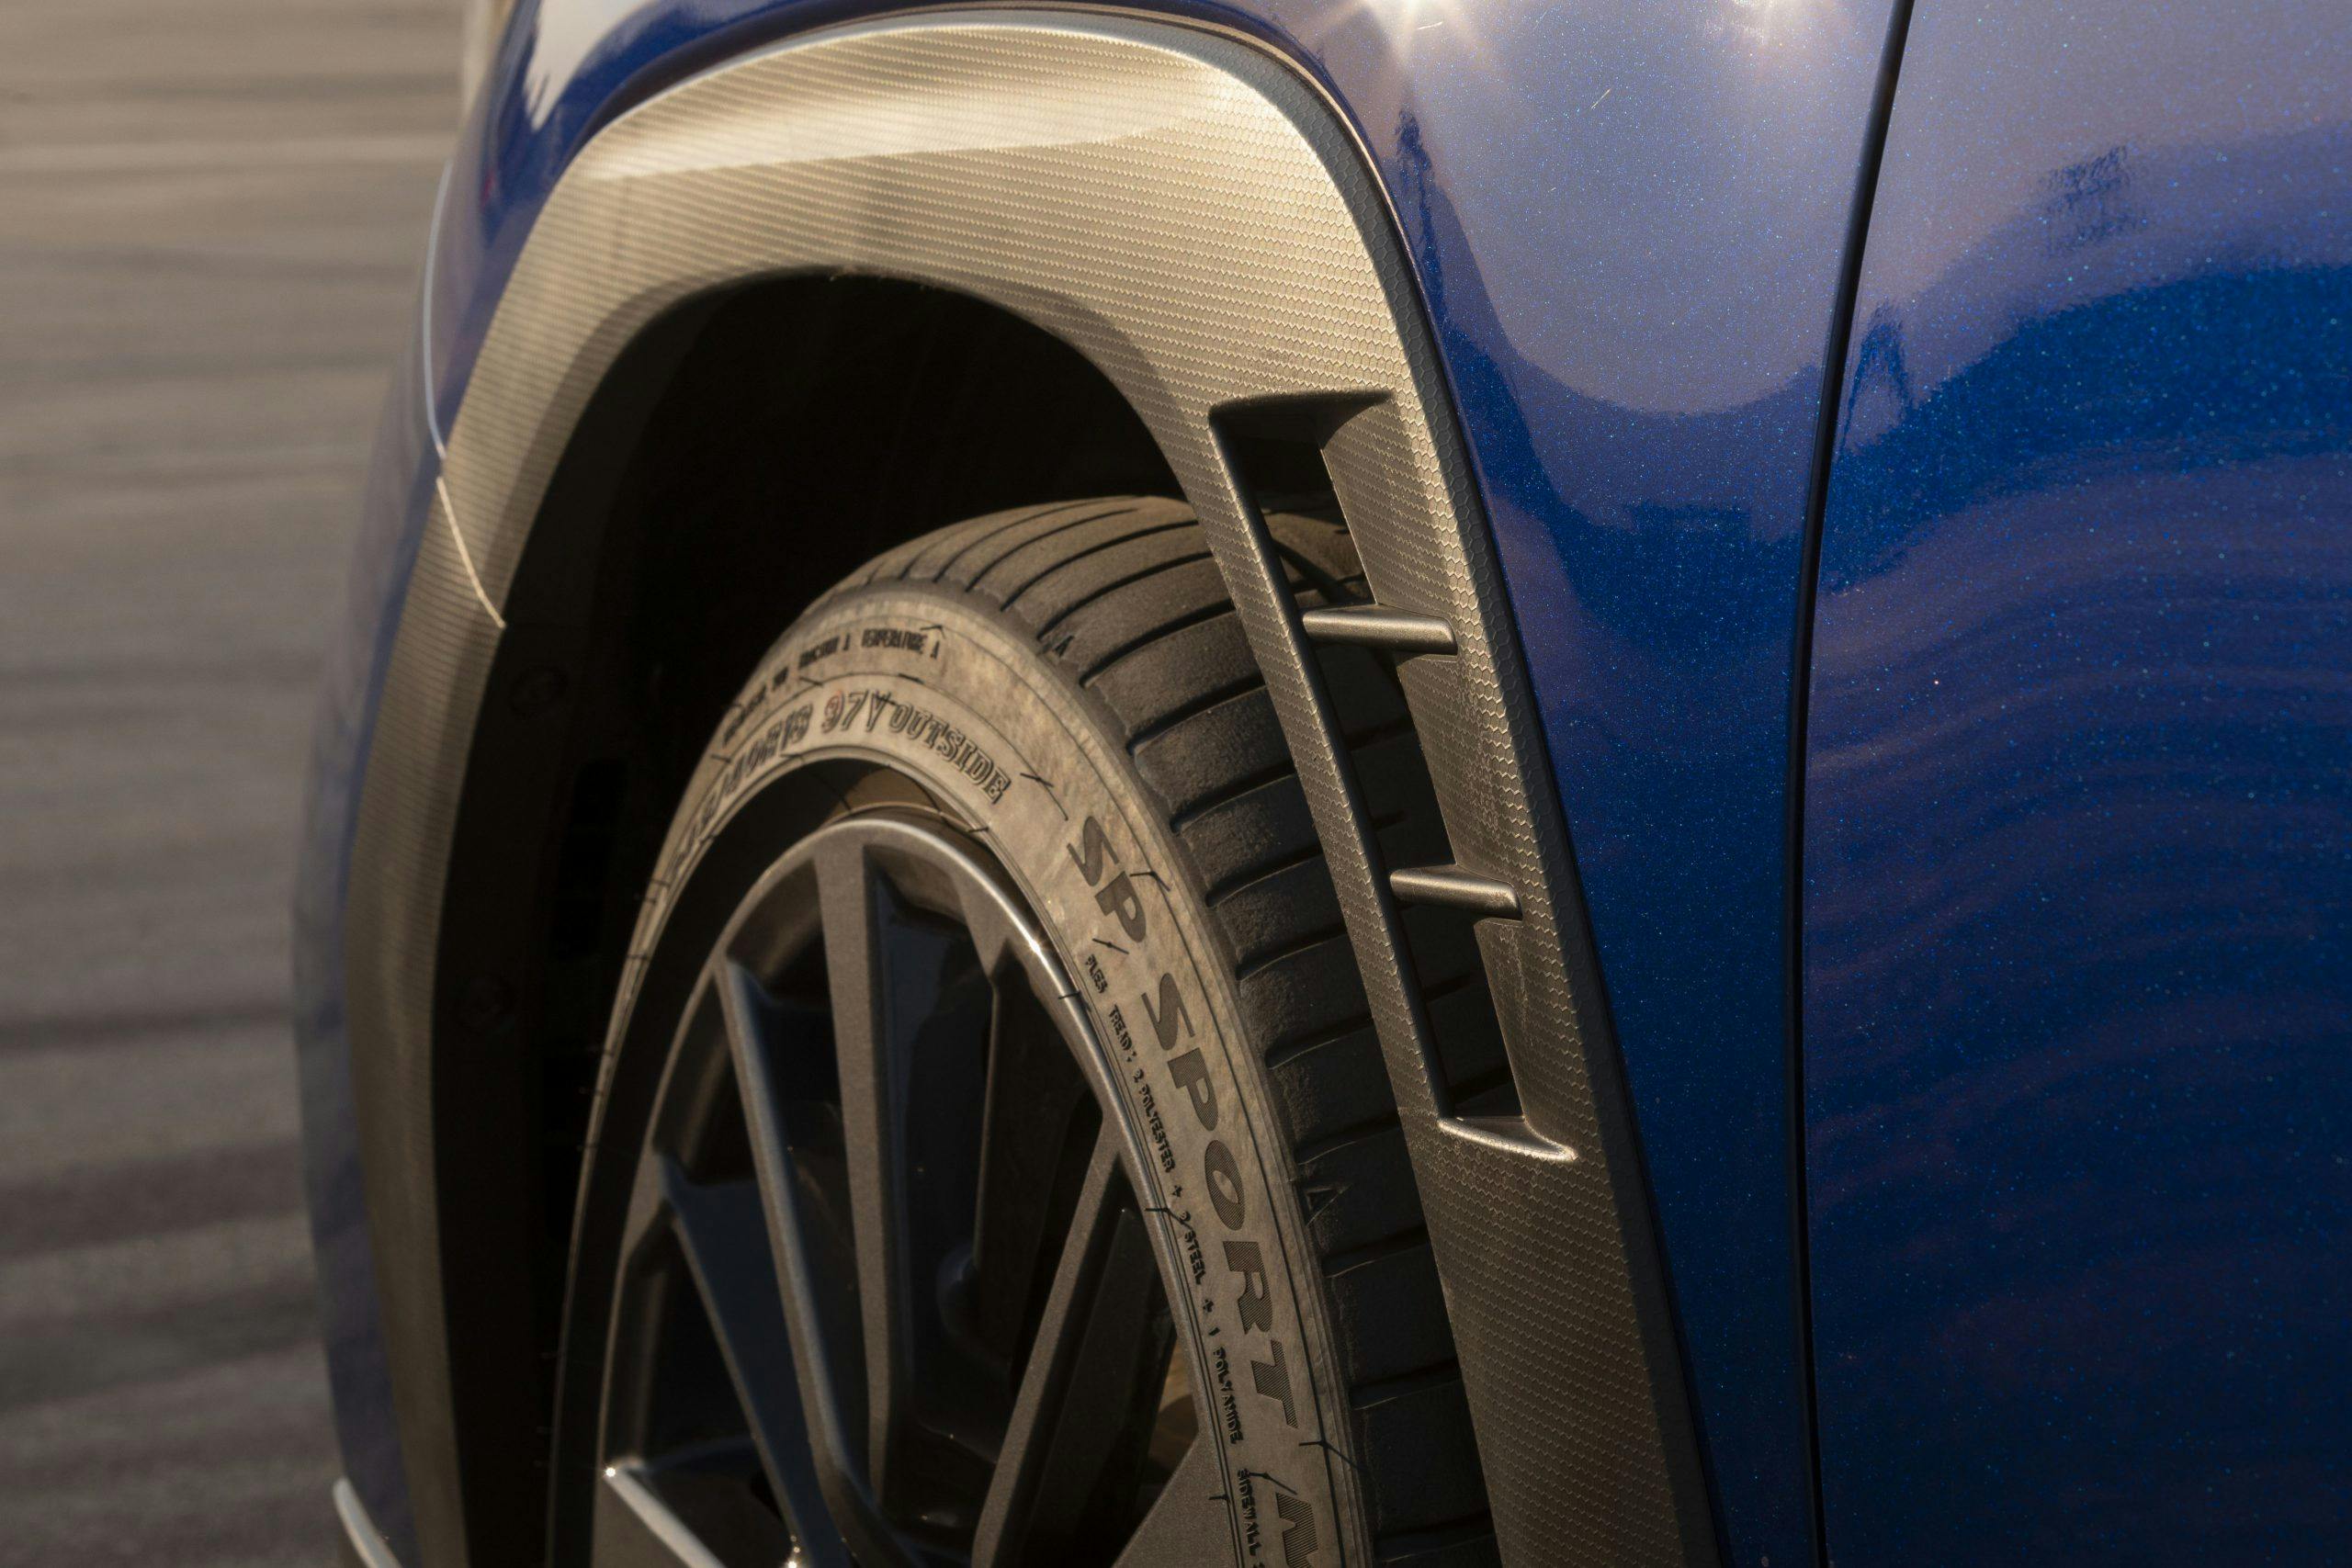 2022 Subaru WRX wheel tire trim detail